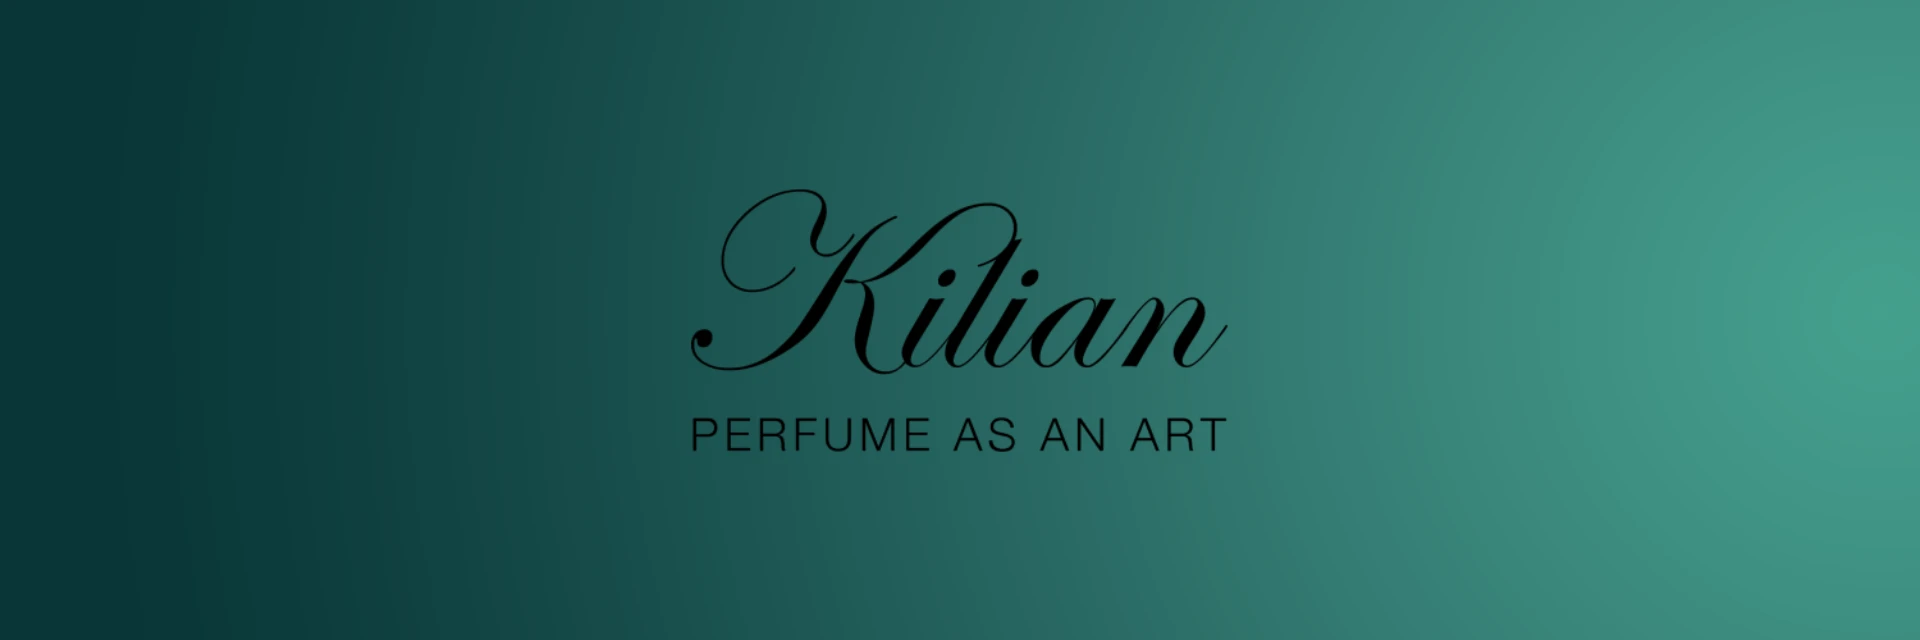 Kilian Perfumes Banner Image